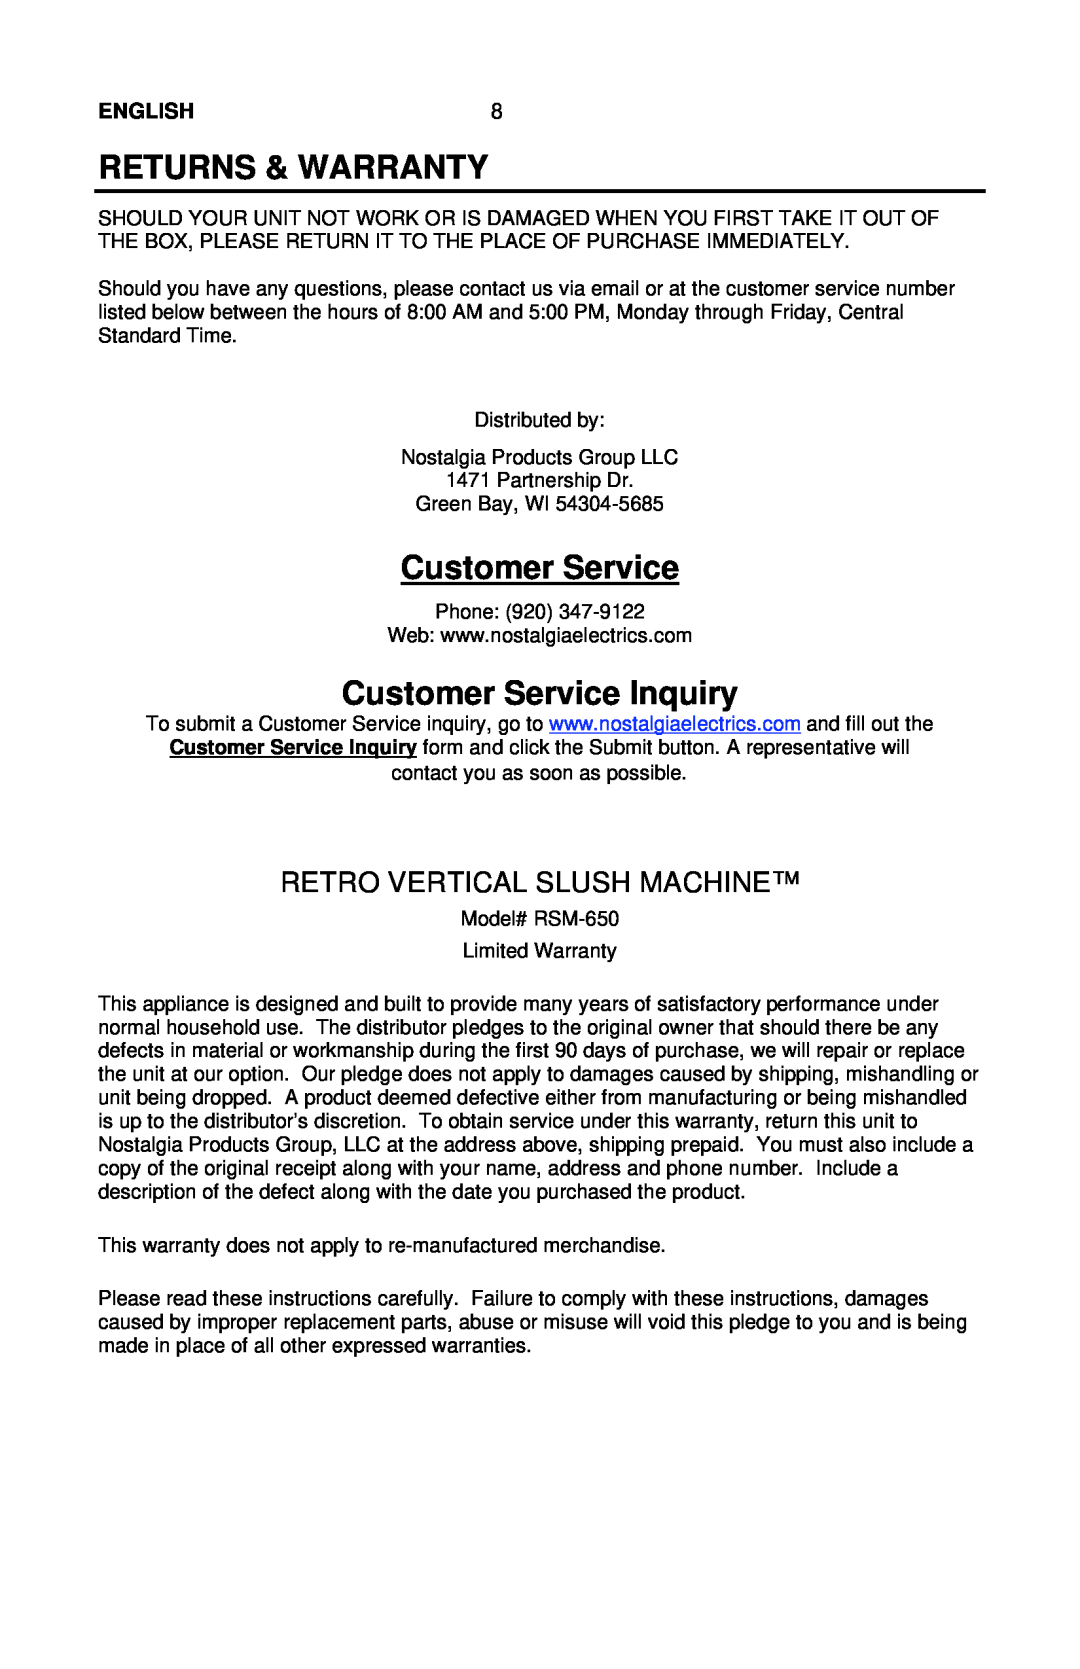 Nostalgia Electrics RSM-650 manual Returns & Warranty, Customer Service Inquiry, Retro Vertical Slush Machine, ENGLISH8 